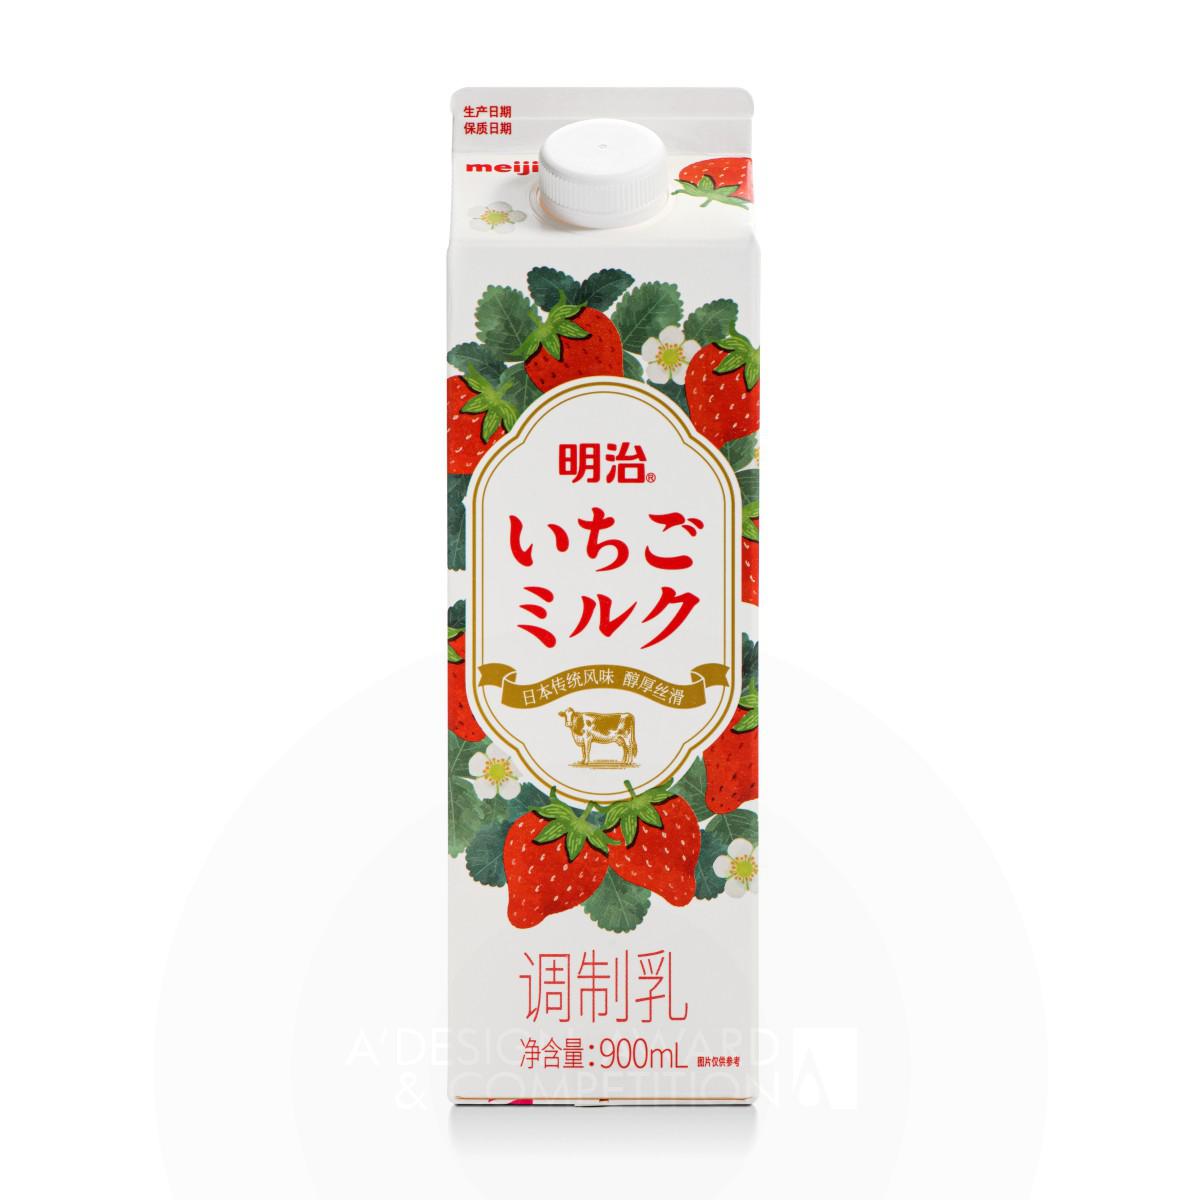 Chilled Milk Packaging by Kazuo Fukushima